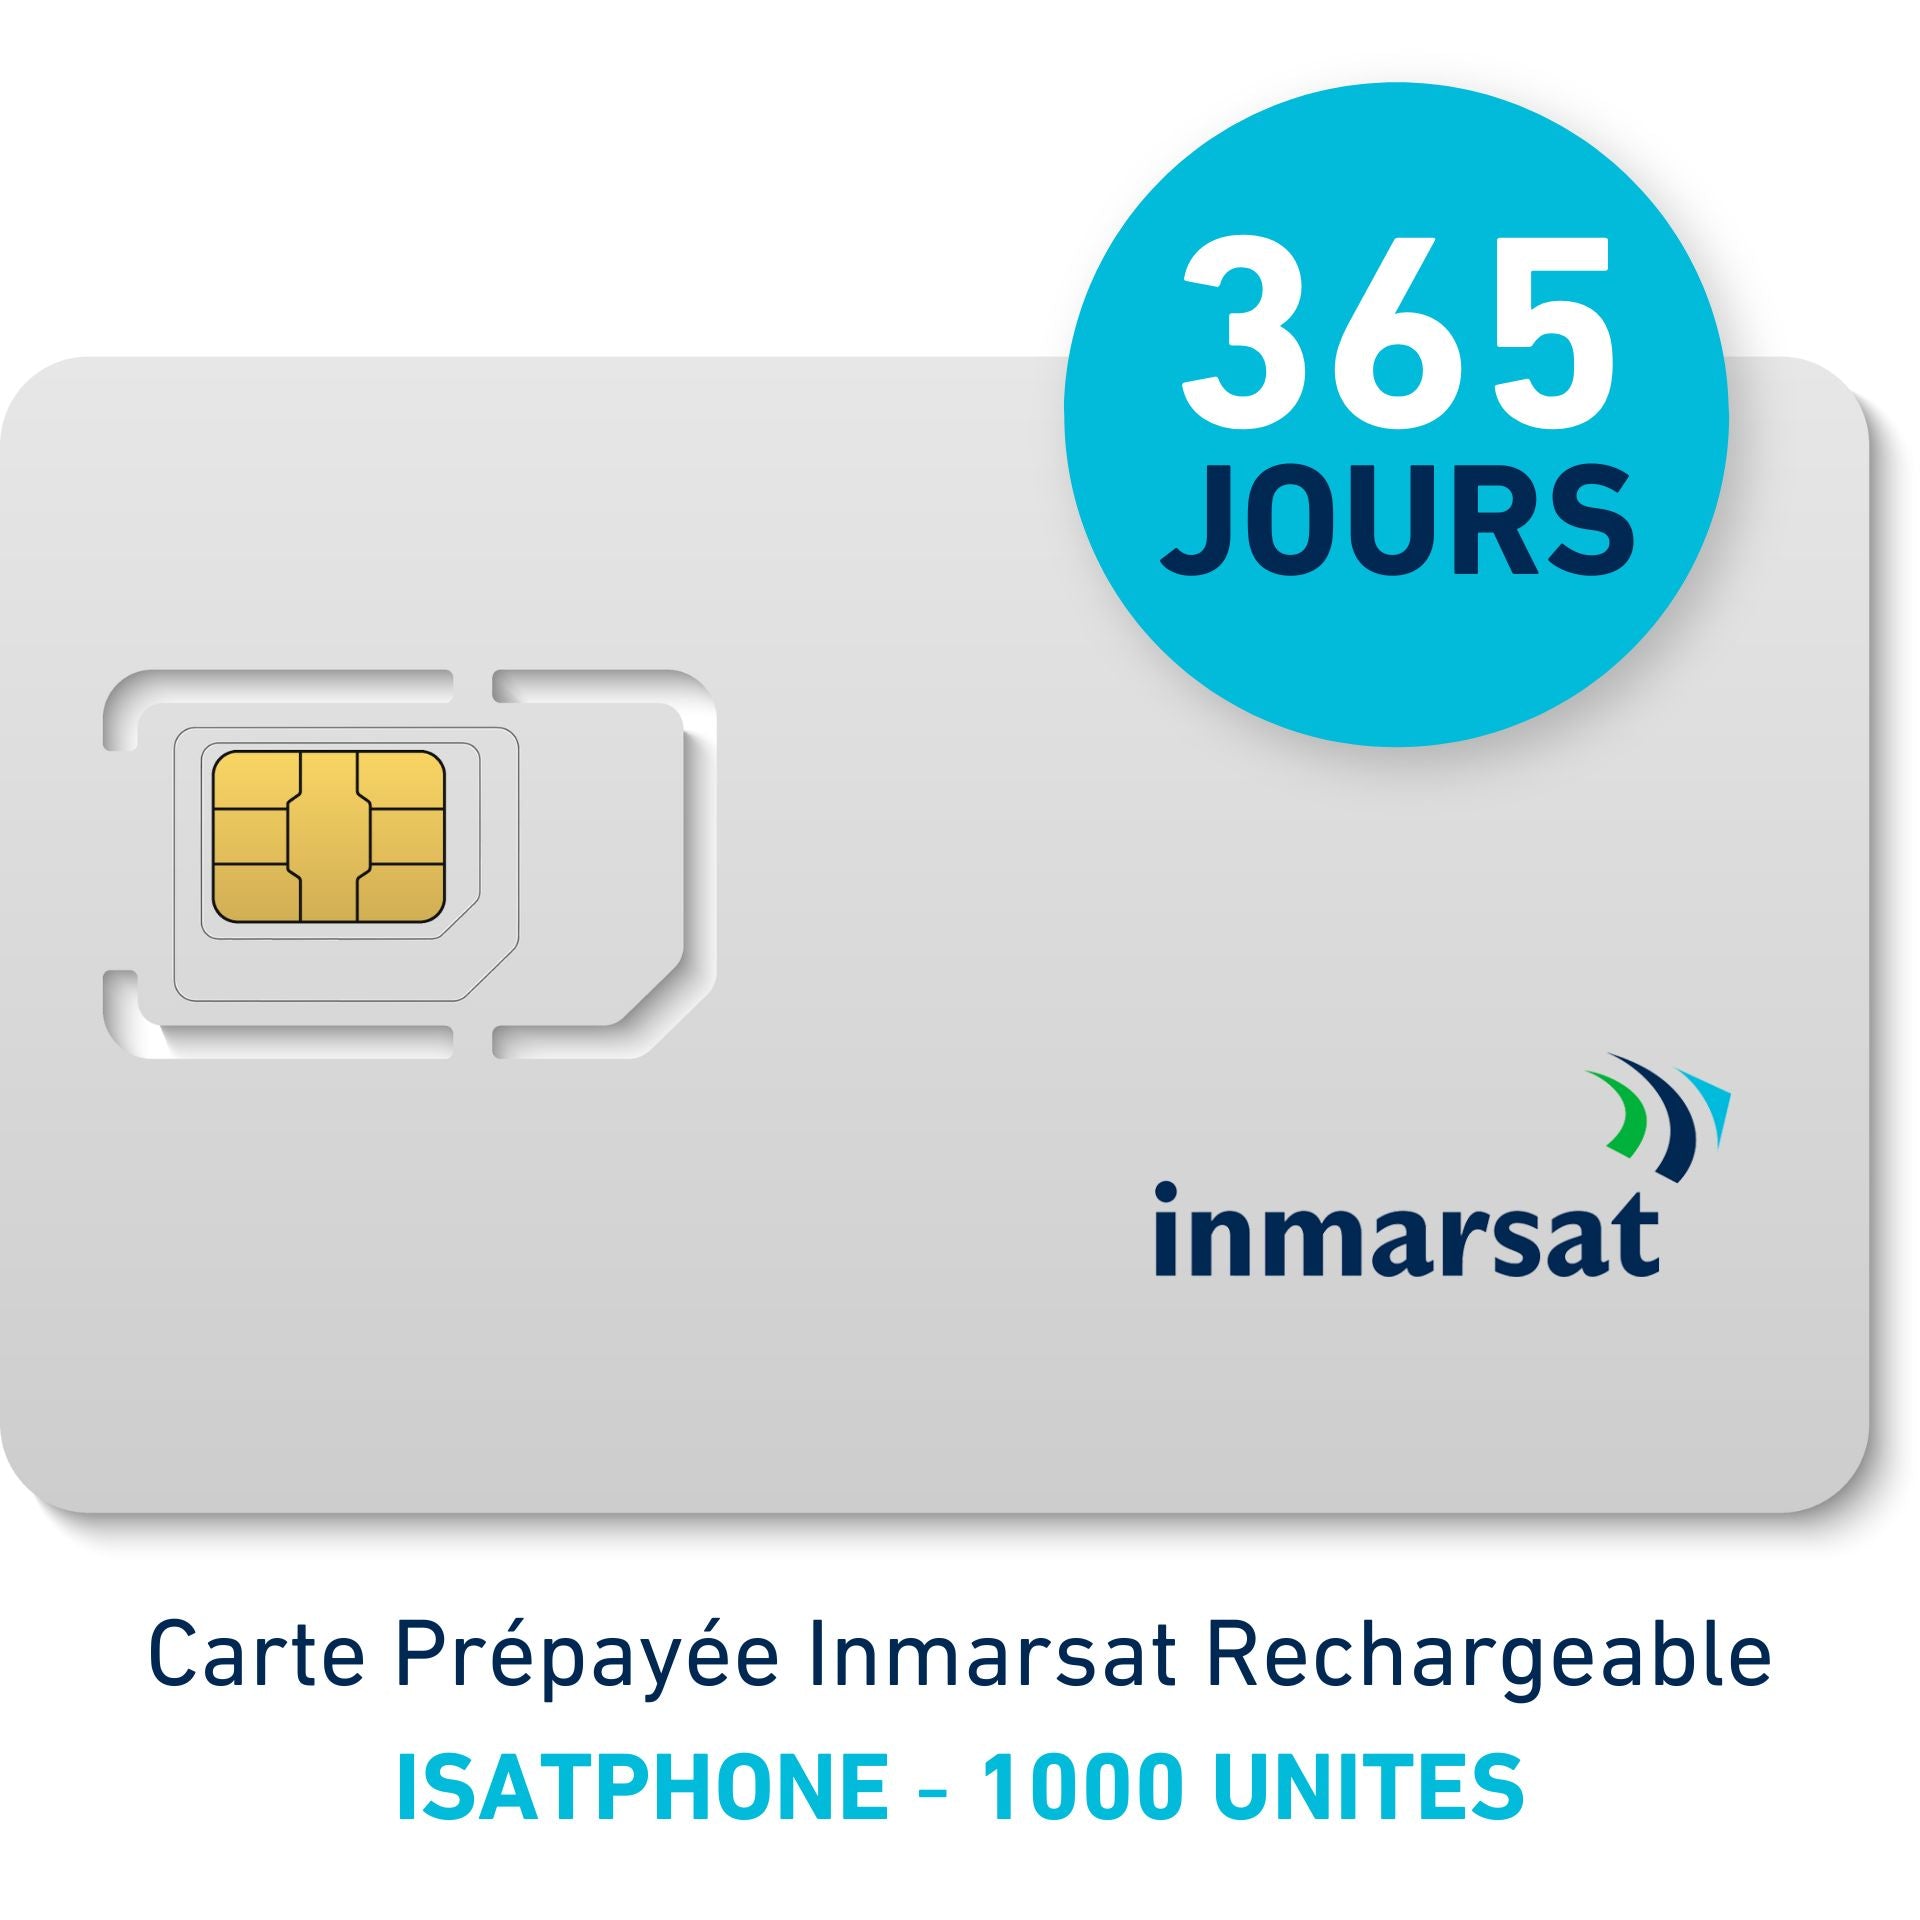 INMARSAT Rechargeable ISATPHONE Prepaid Card - 1000 UNITS - 365 DAYS